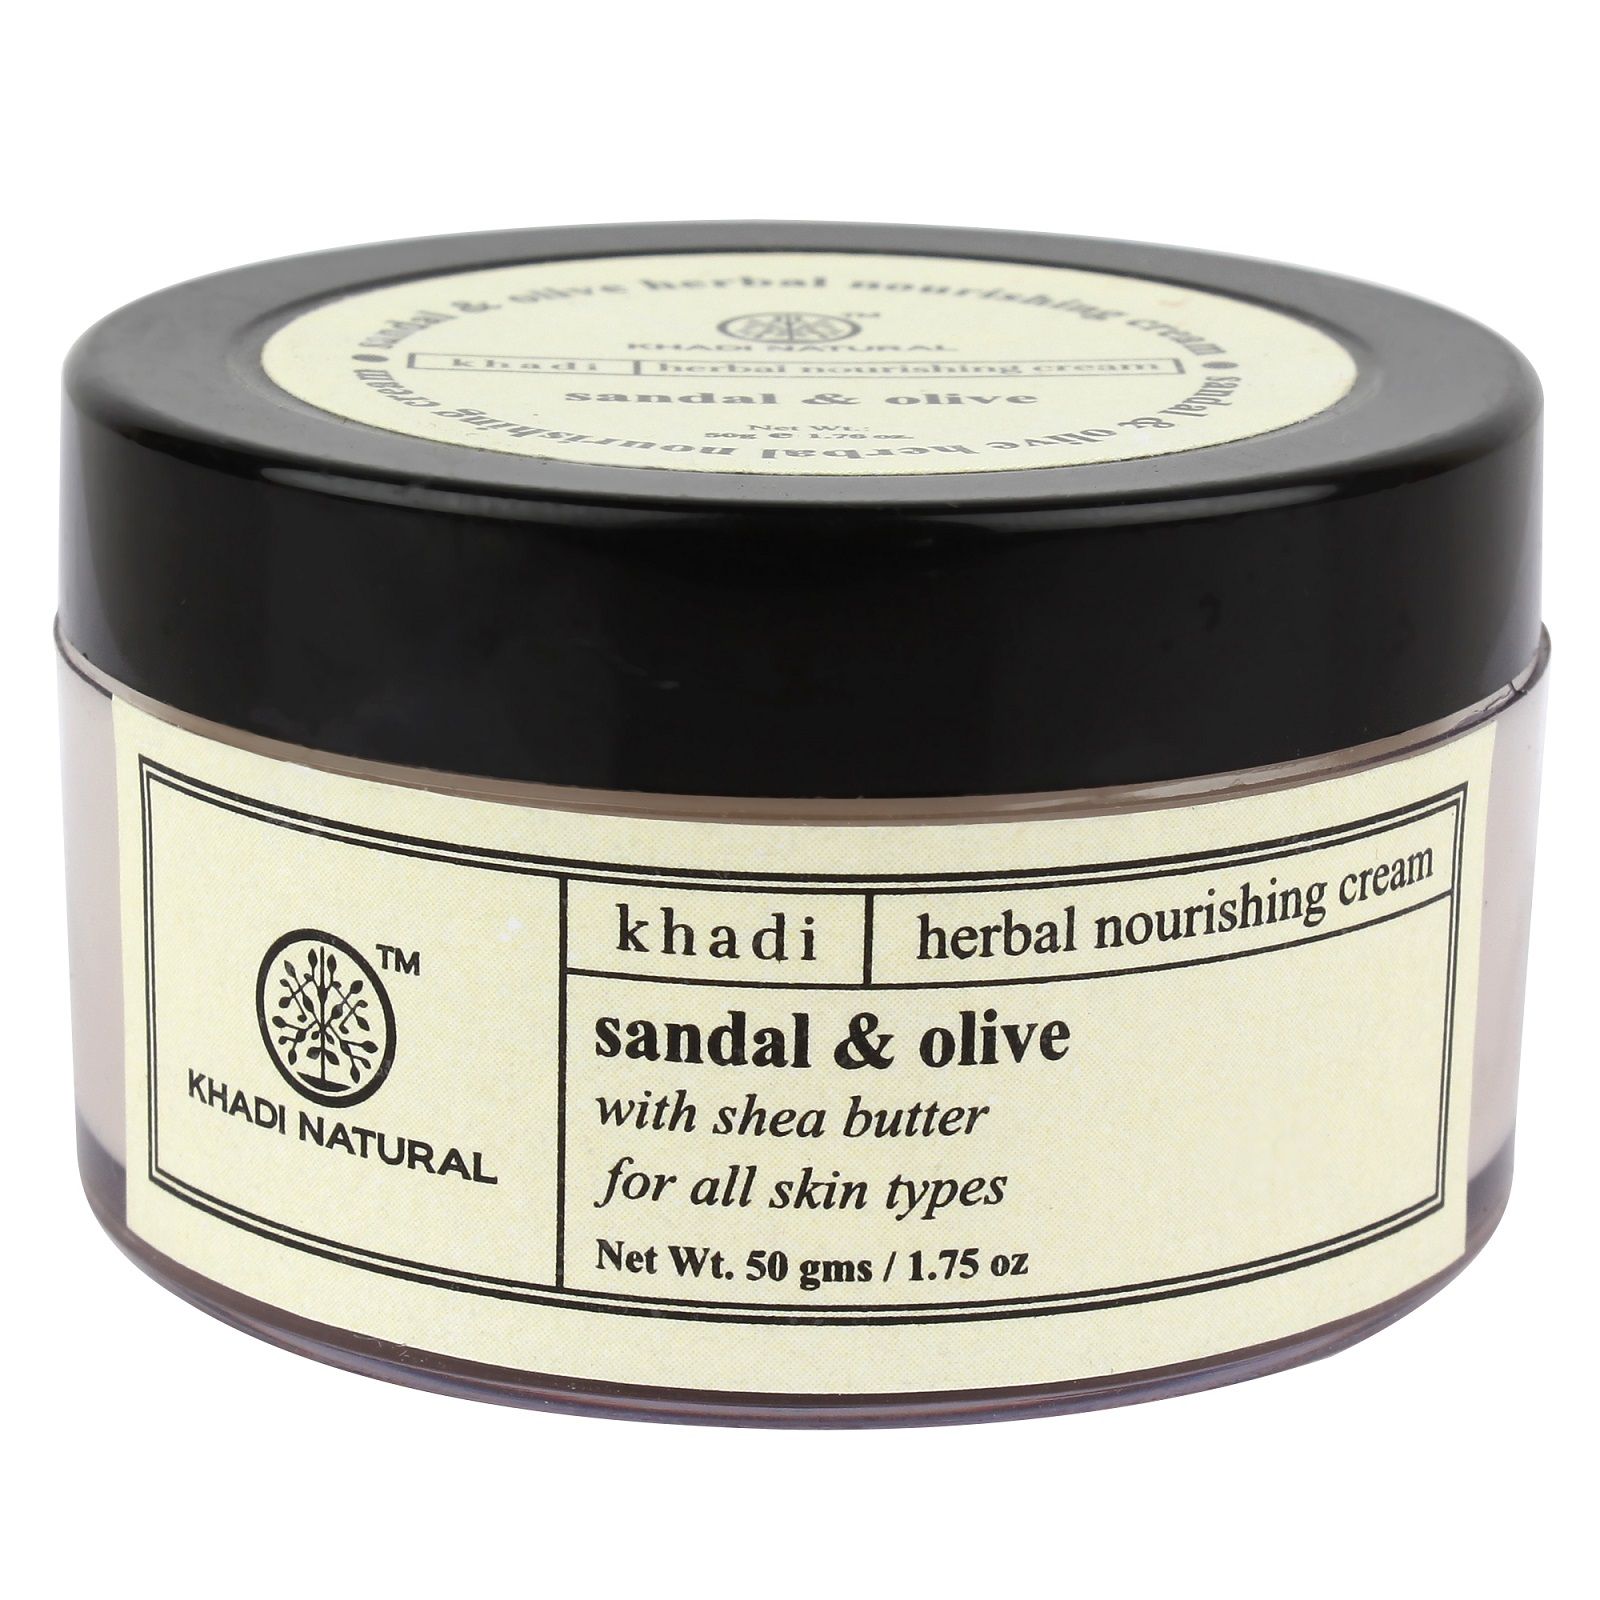 Khadi Natural Sandal & Olive Herbal Nourishing Cream With Shea Butter